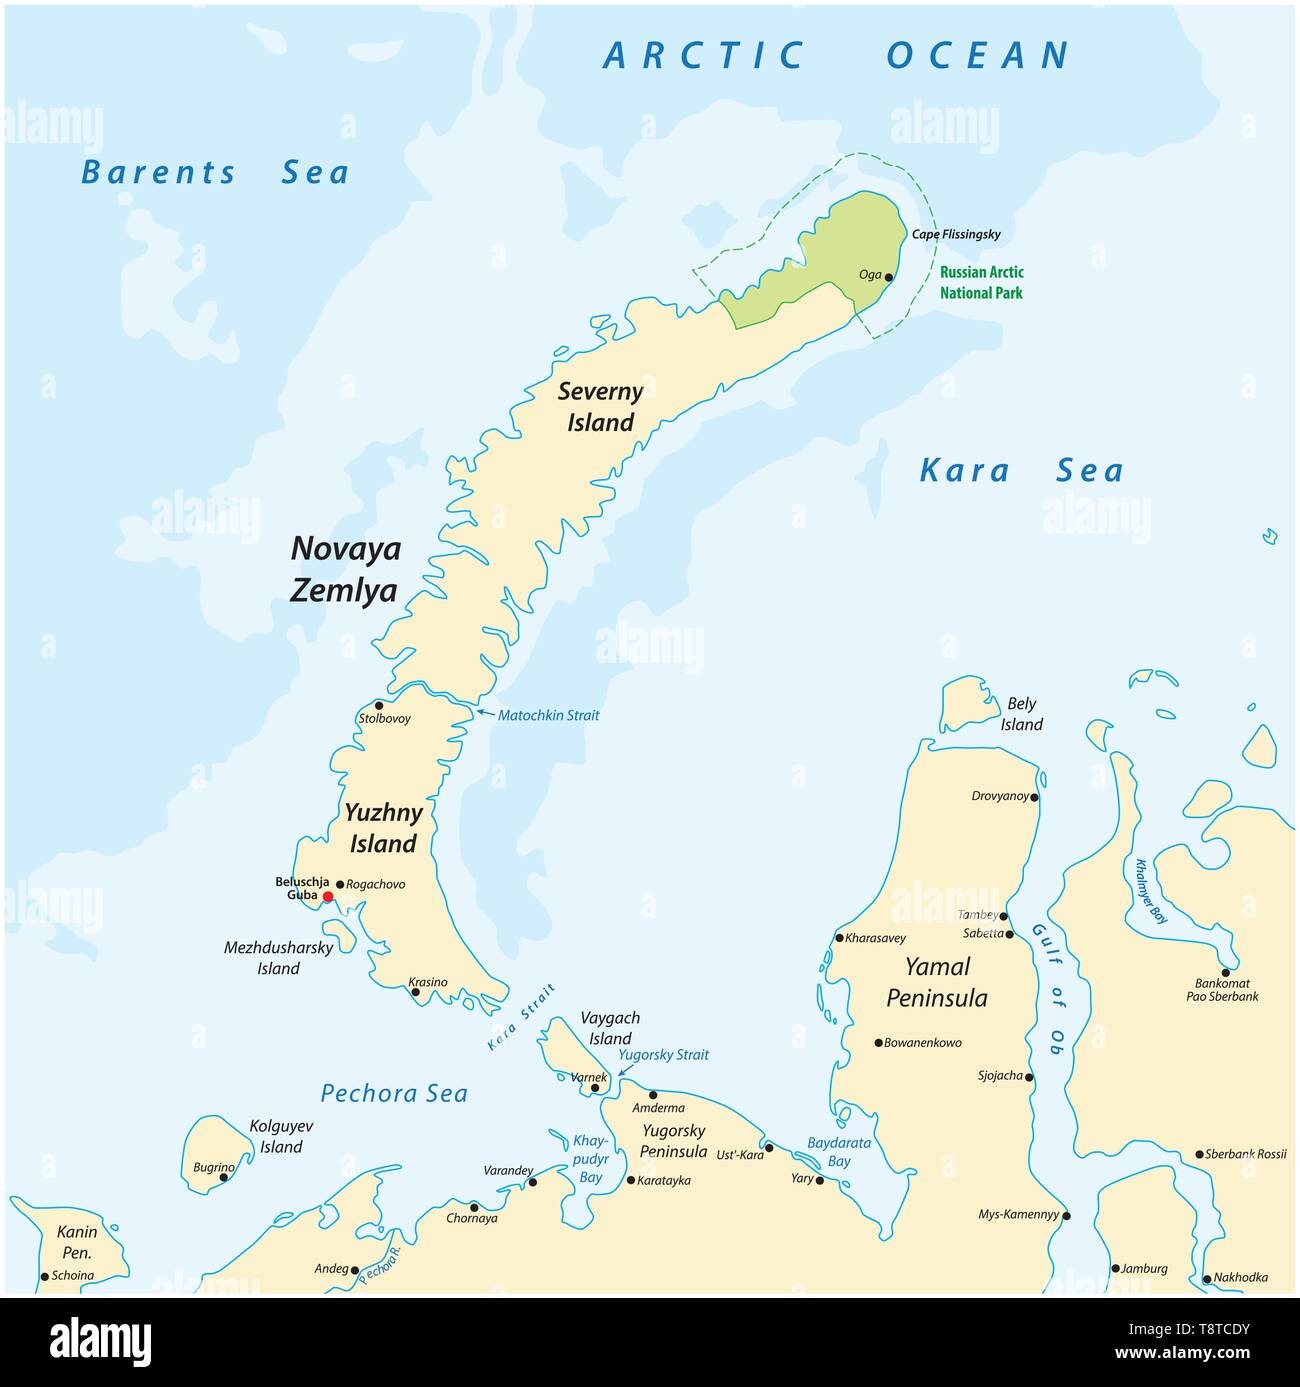 Karte Des Archipels Nova Semlja Im Arktischen Ozean Im Norden Russlands T8tcdy 